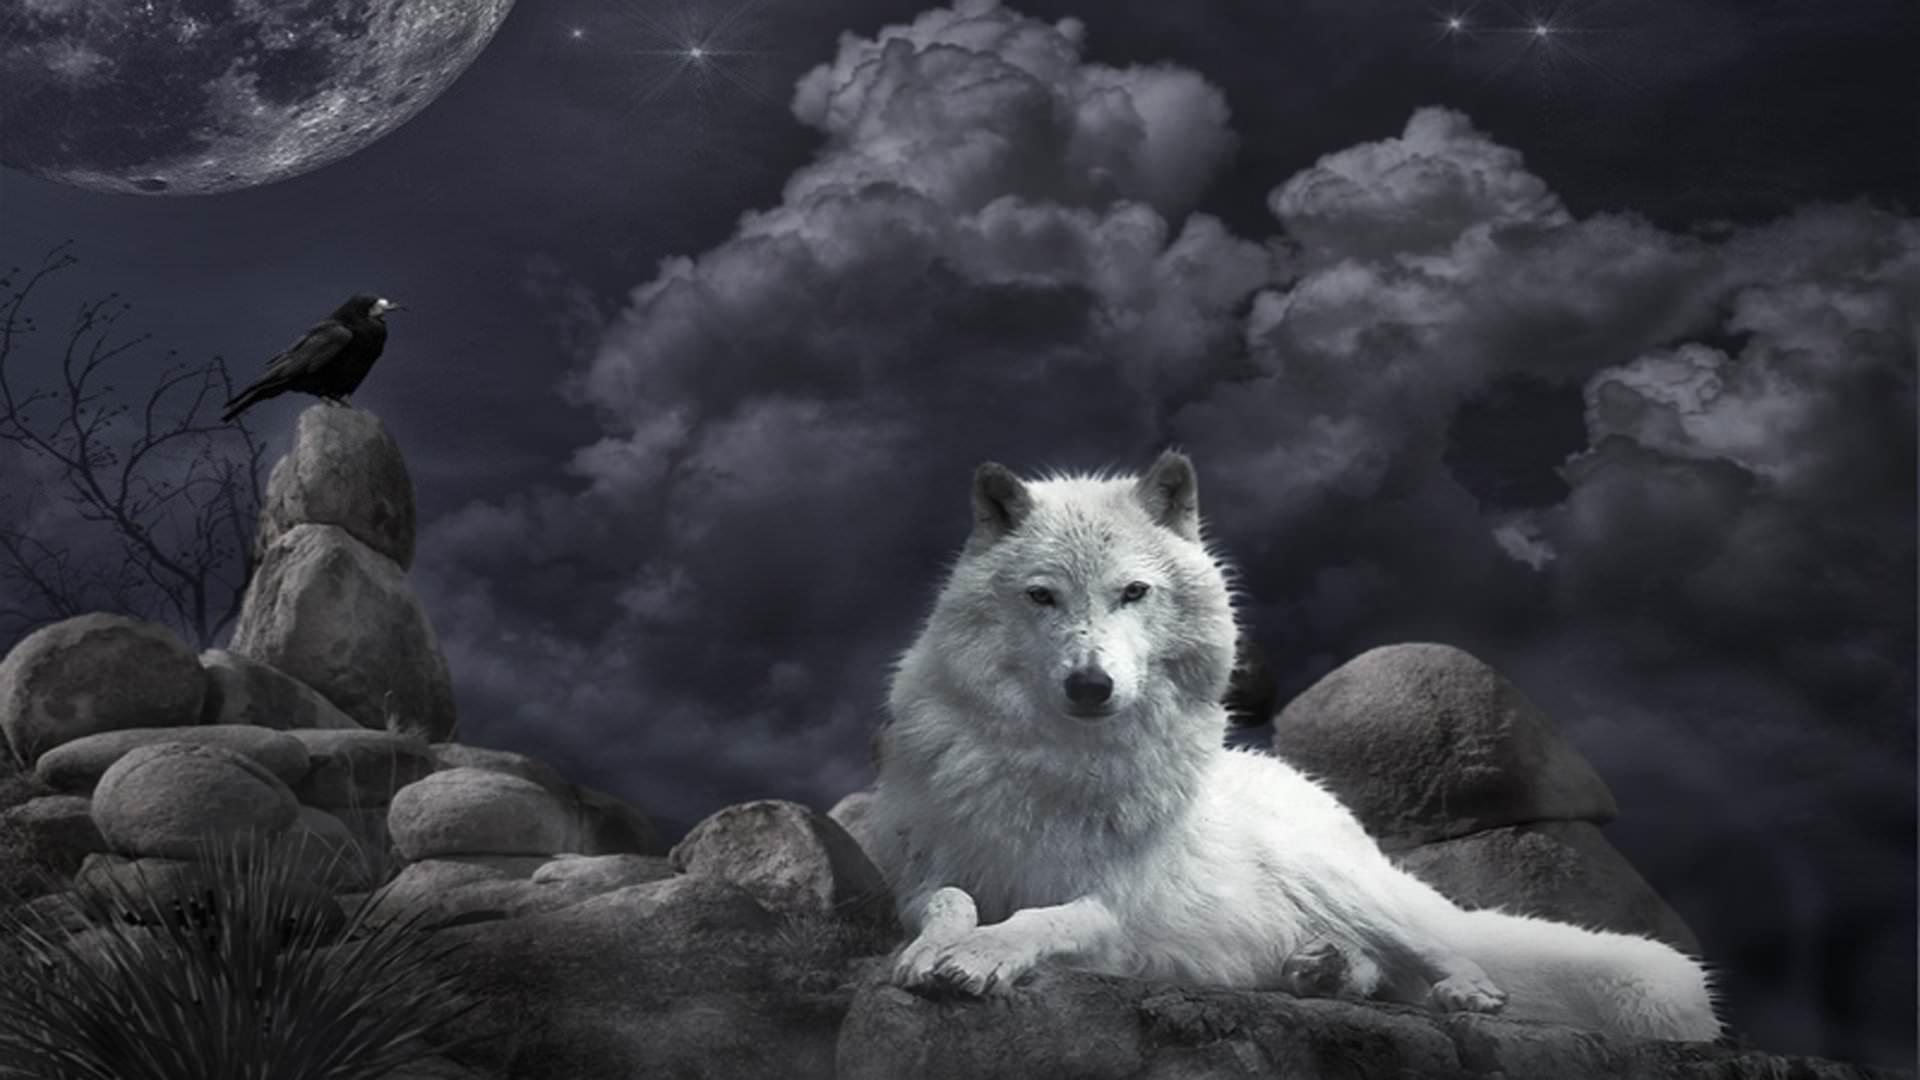 Wolf wallpaper 1920x1080 Full HD (1080p) desktop background